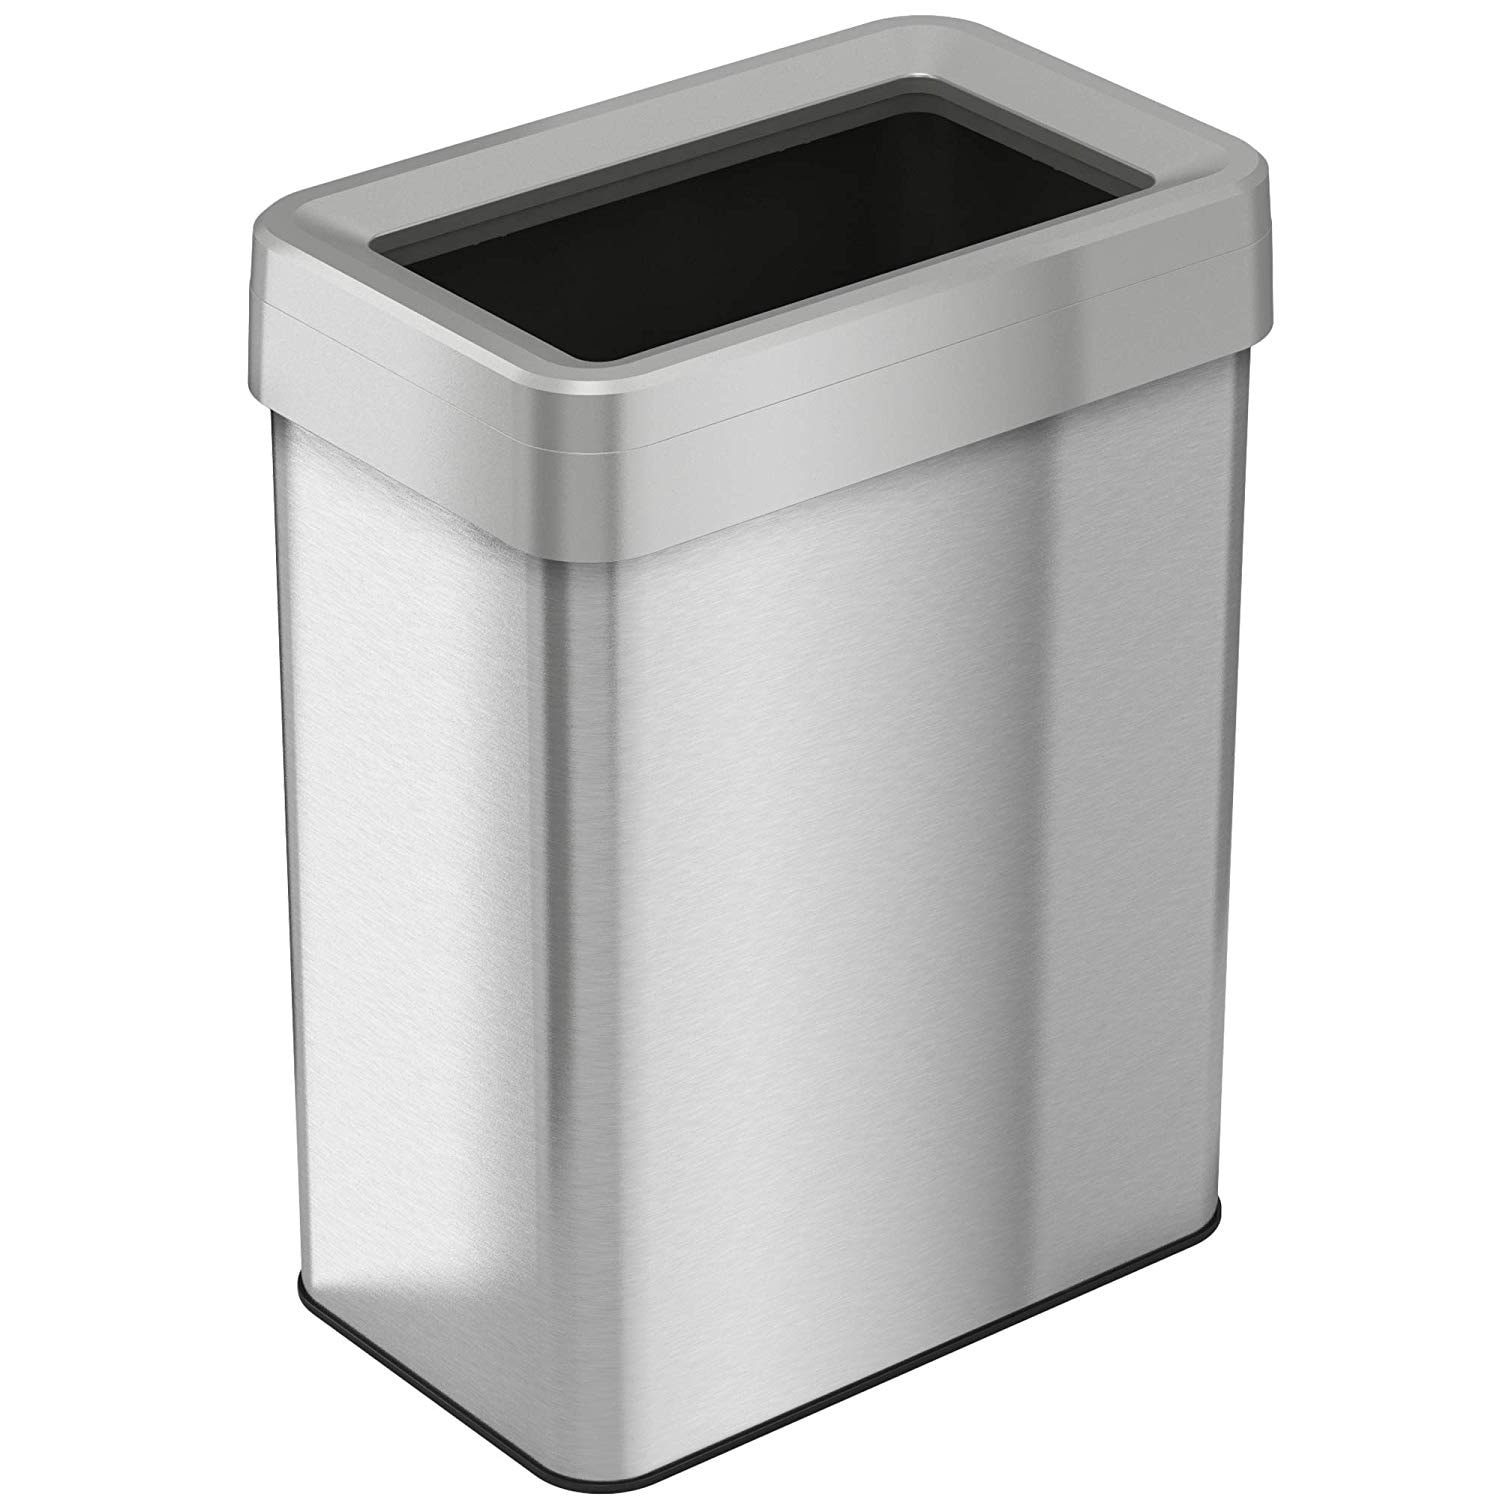 50 litre plastic dustbin